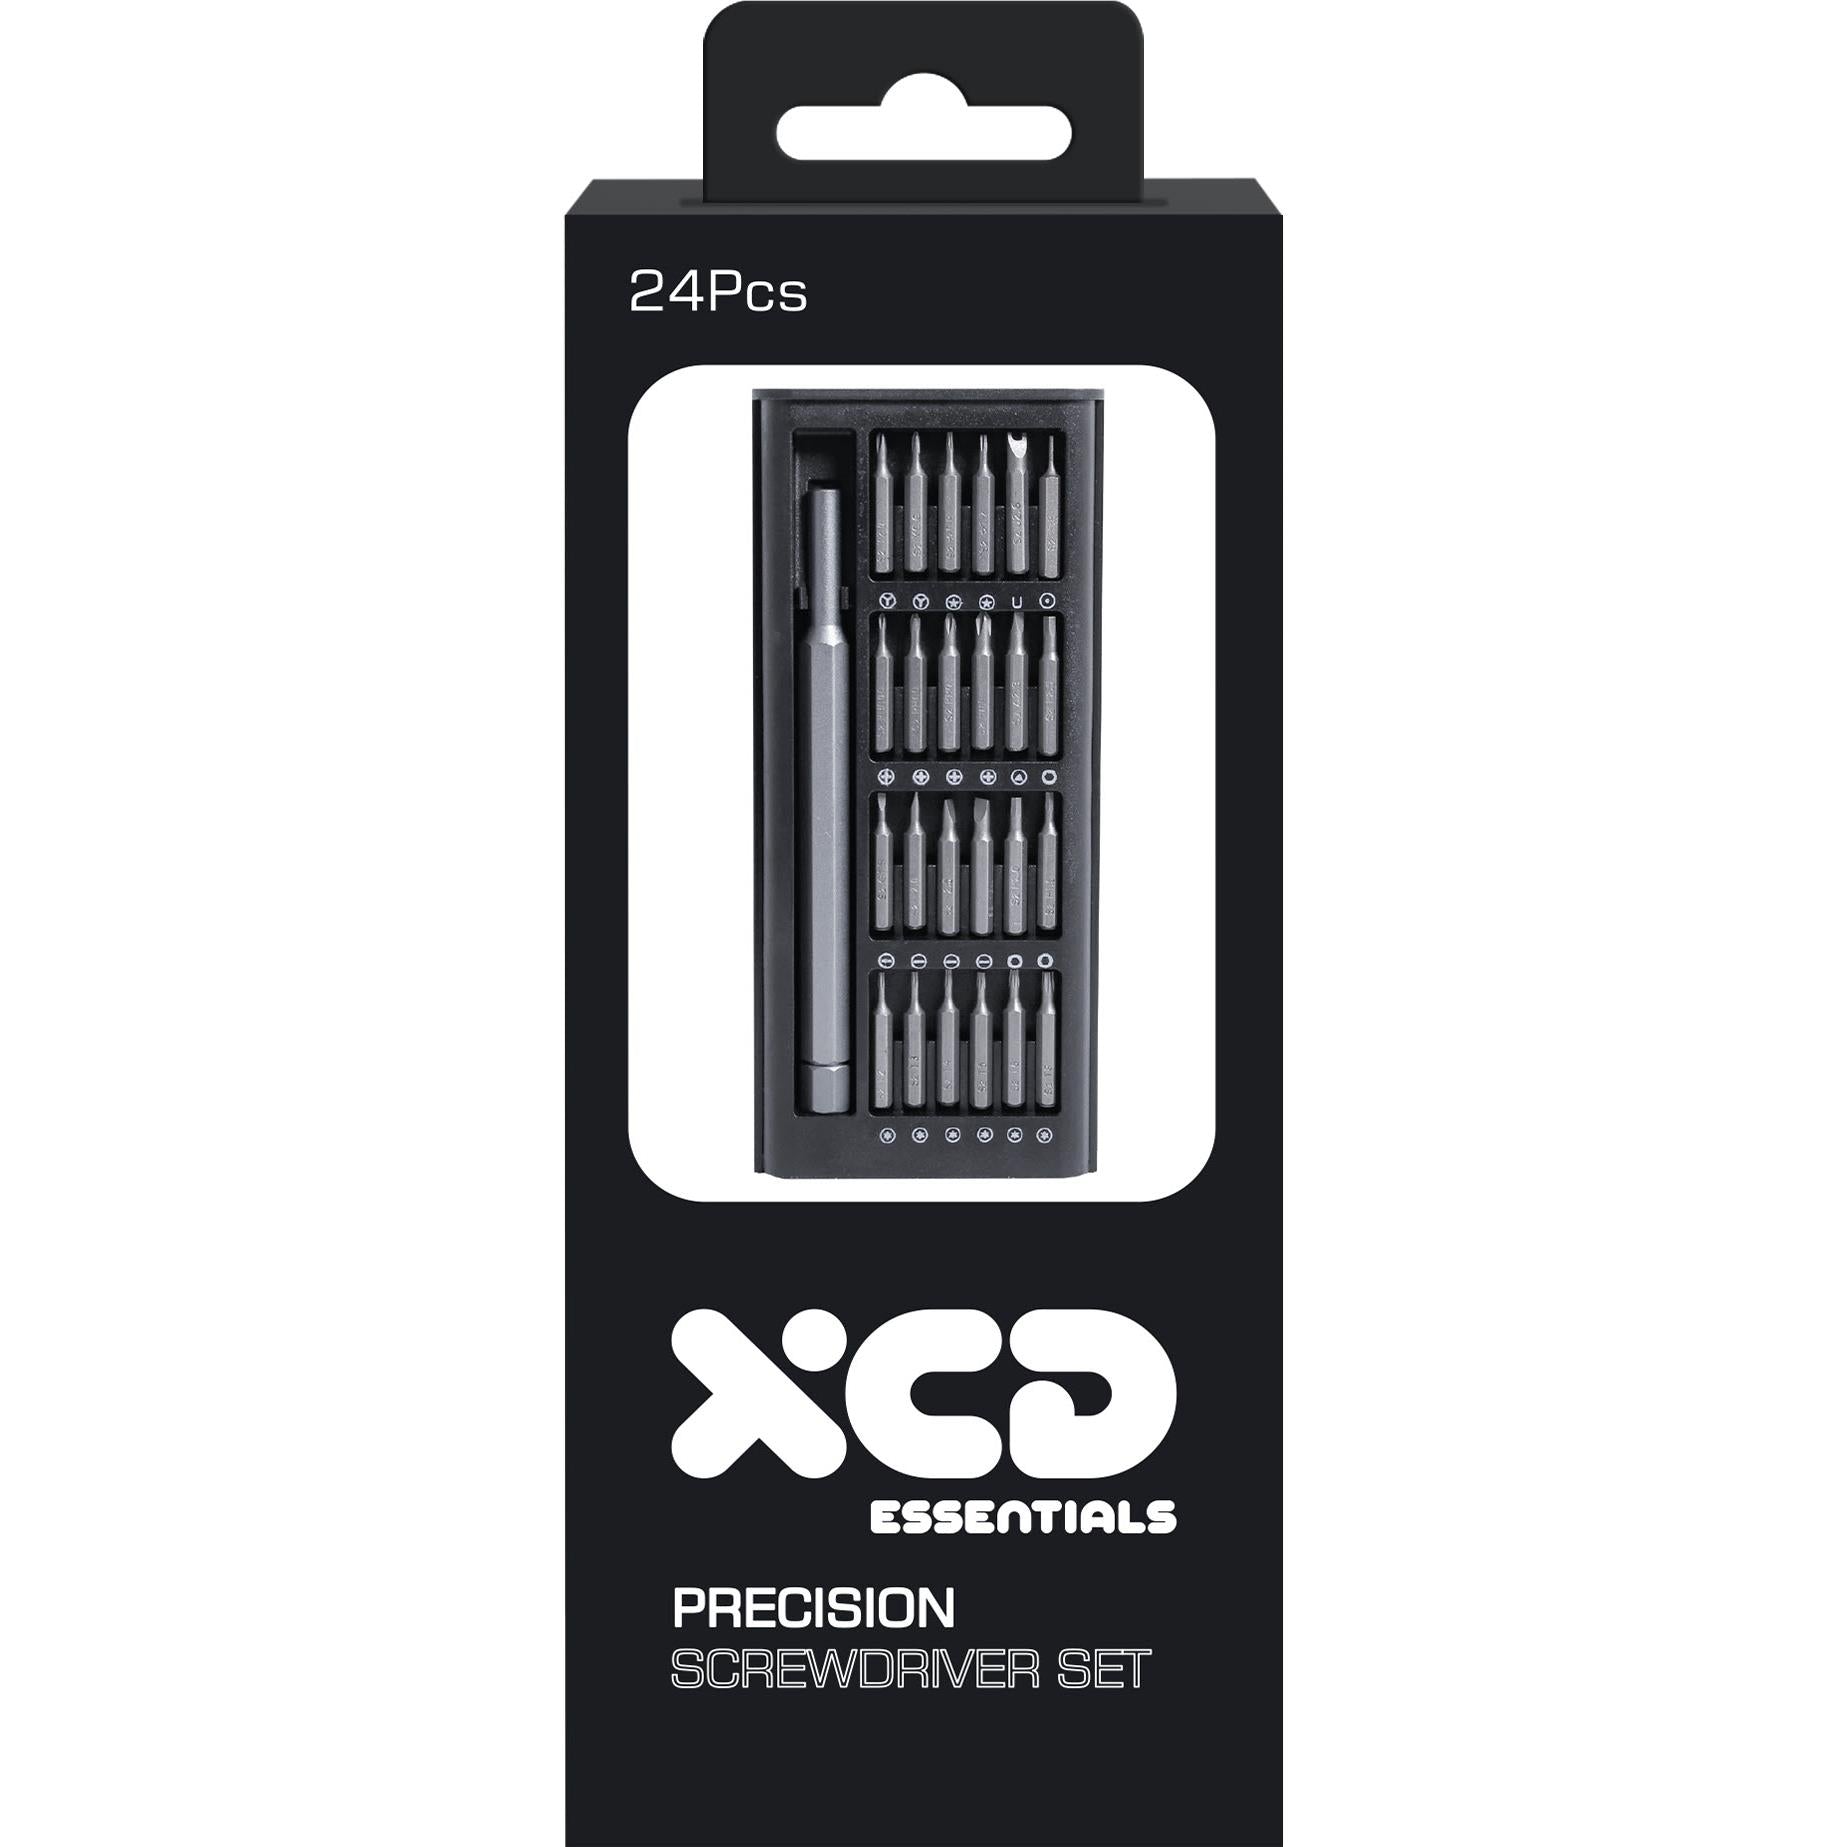 xcd precision screwdriver set